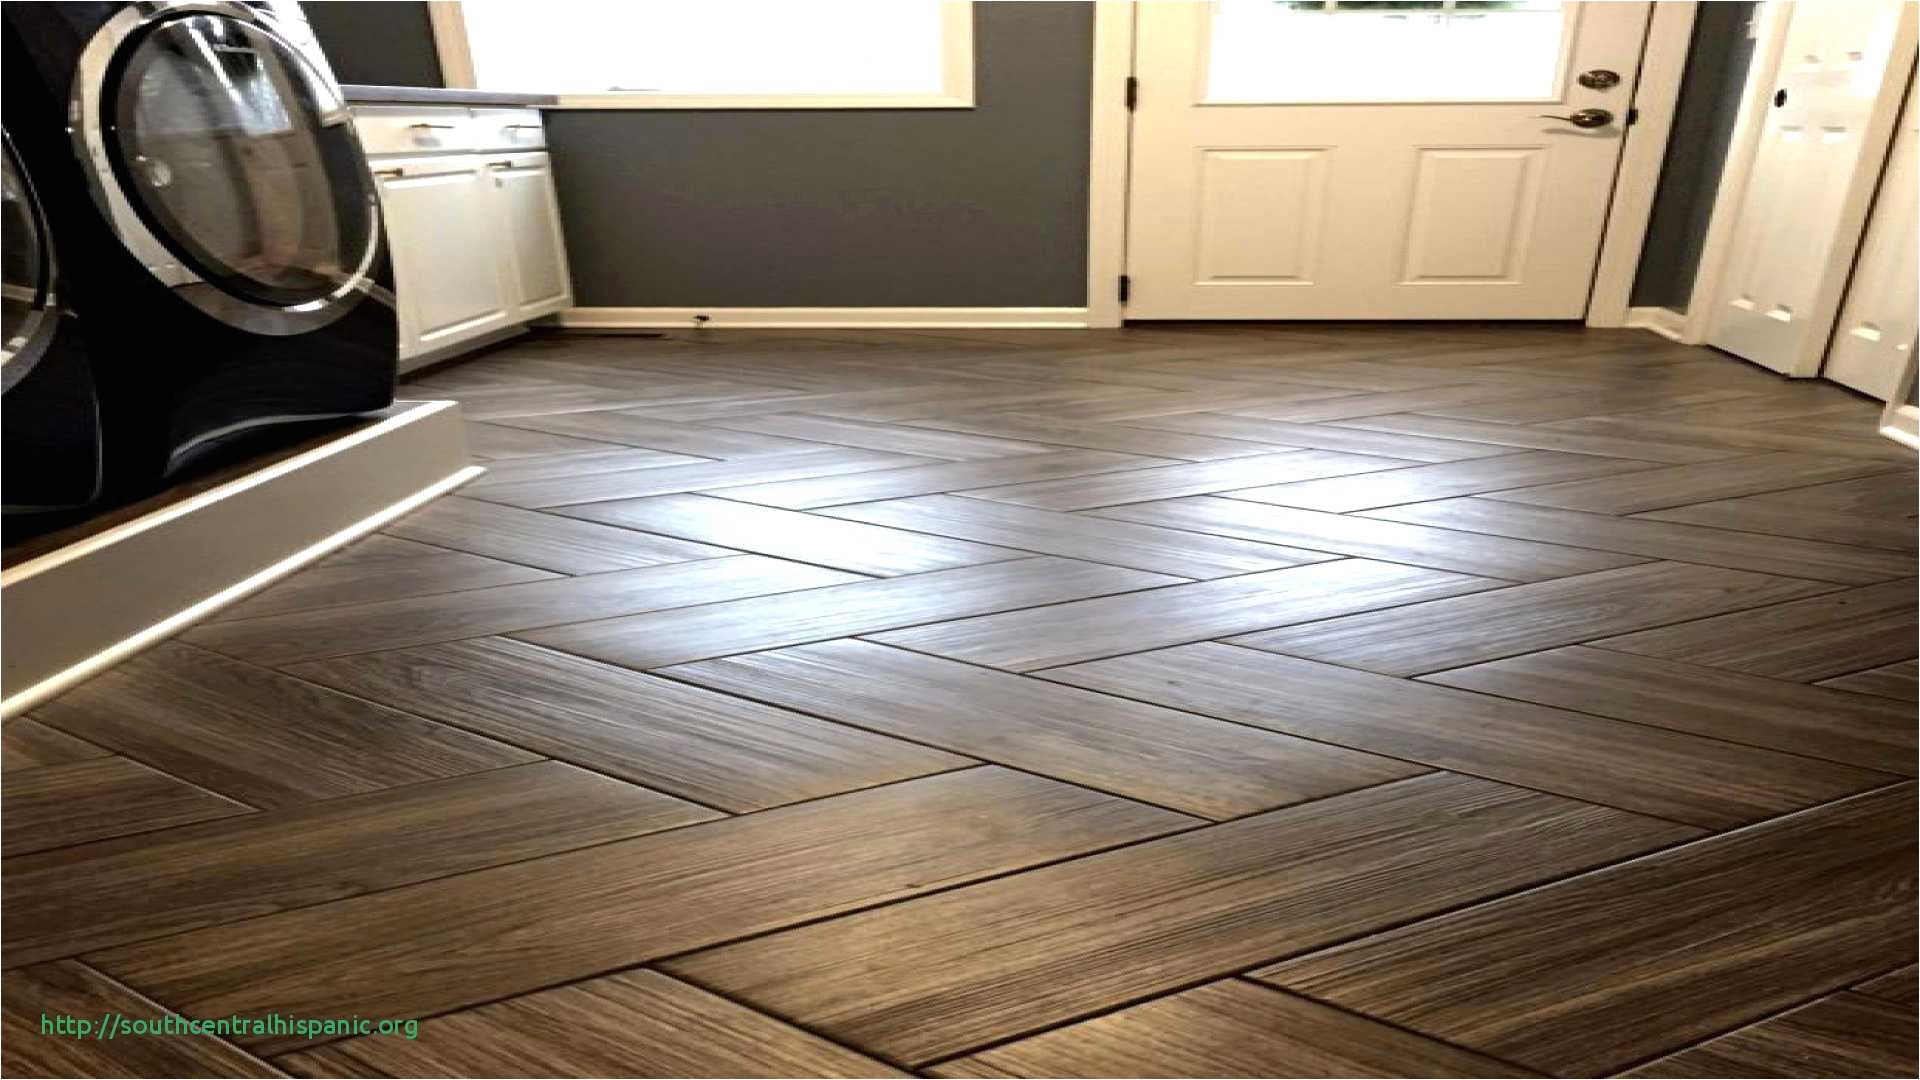 Homart asphalt Floor Tile 17 Charmant Bpi Flooring Ideas Blog